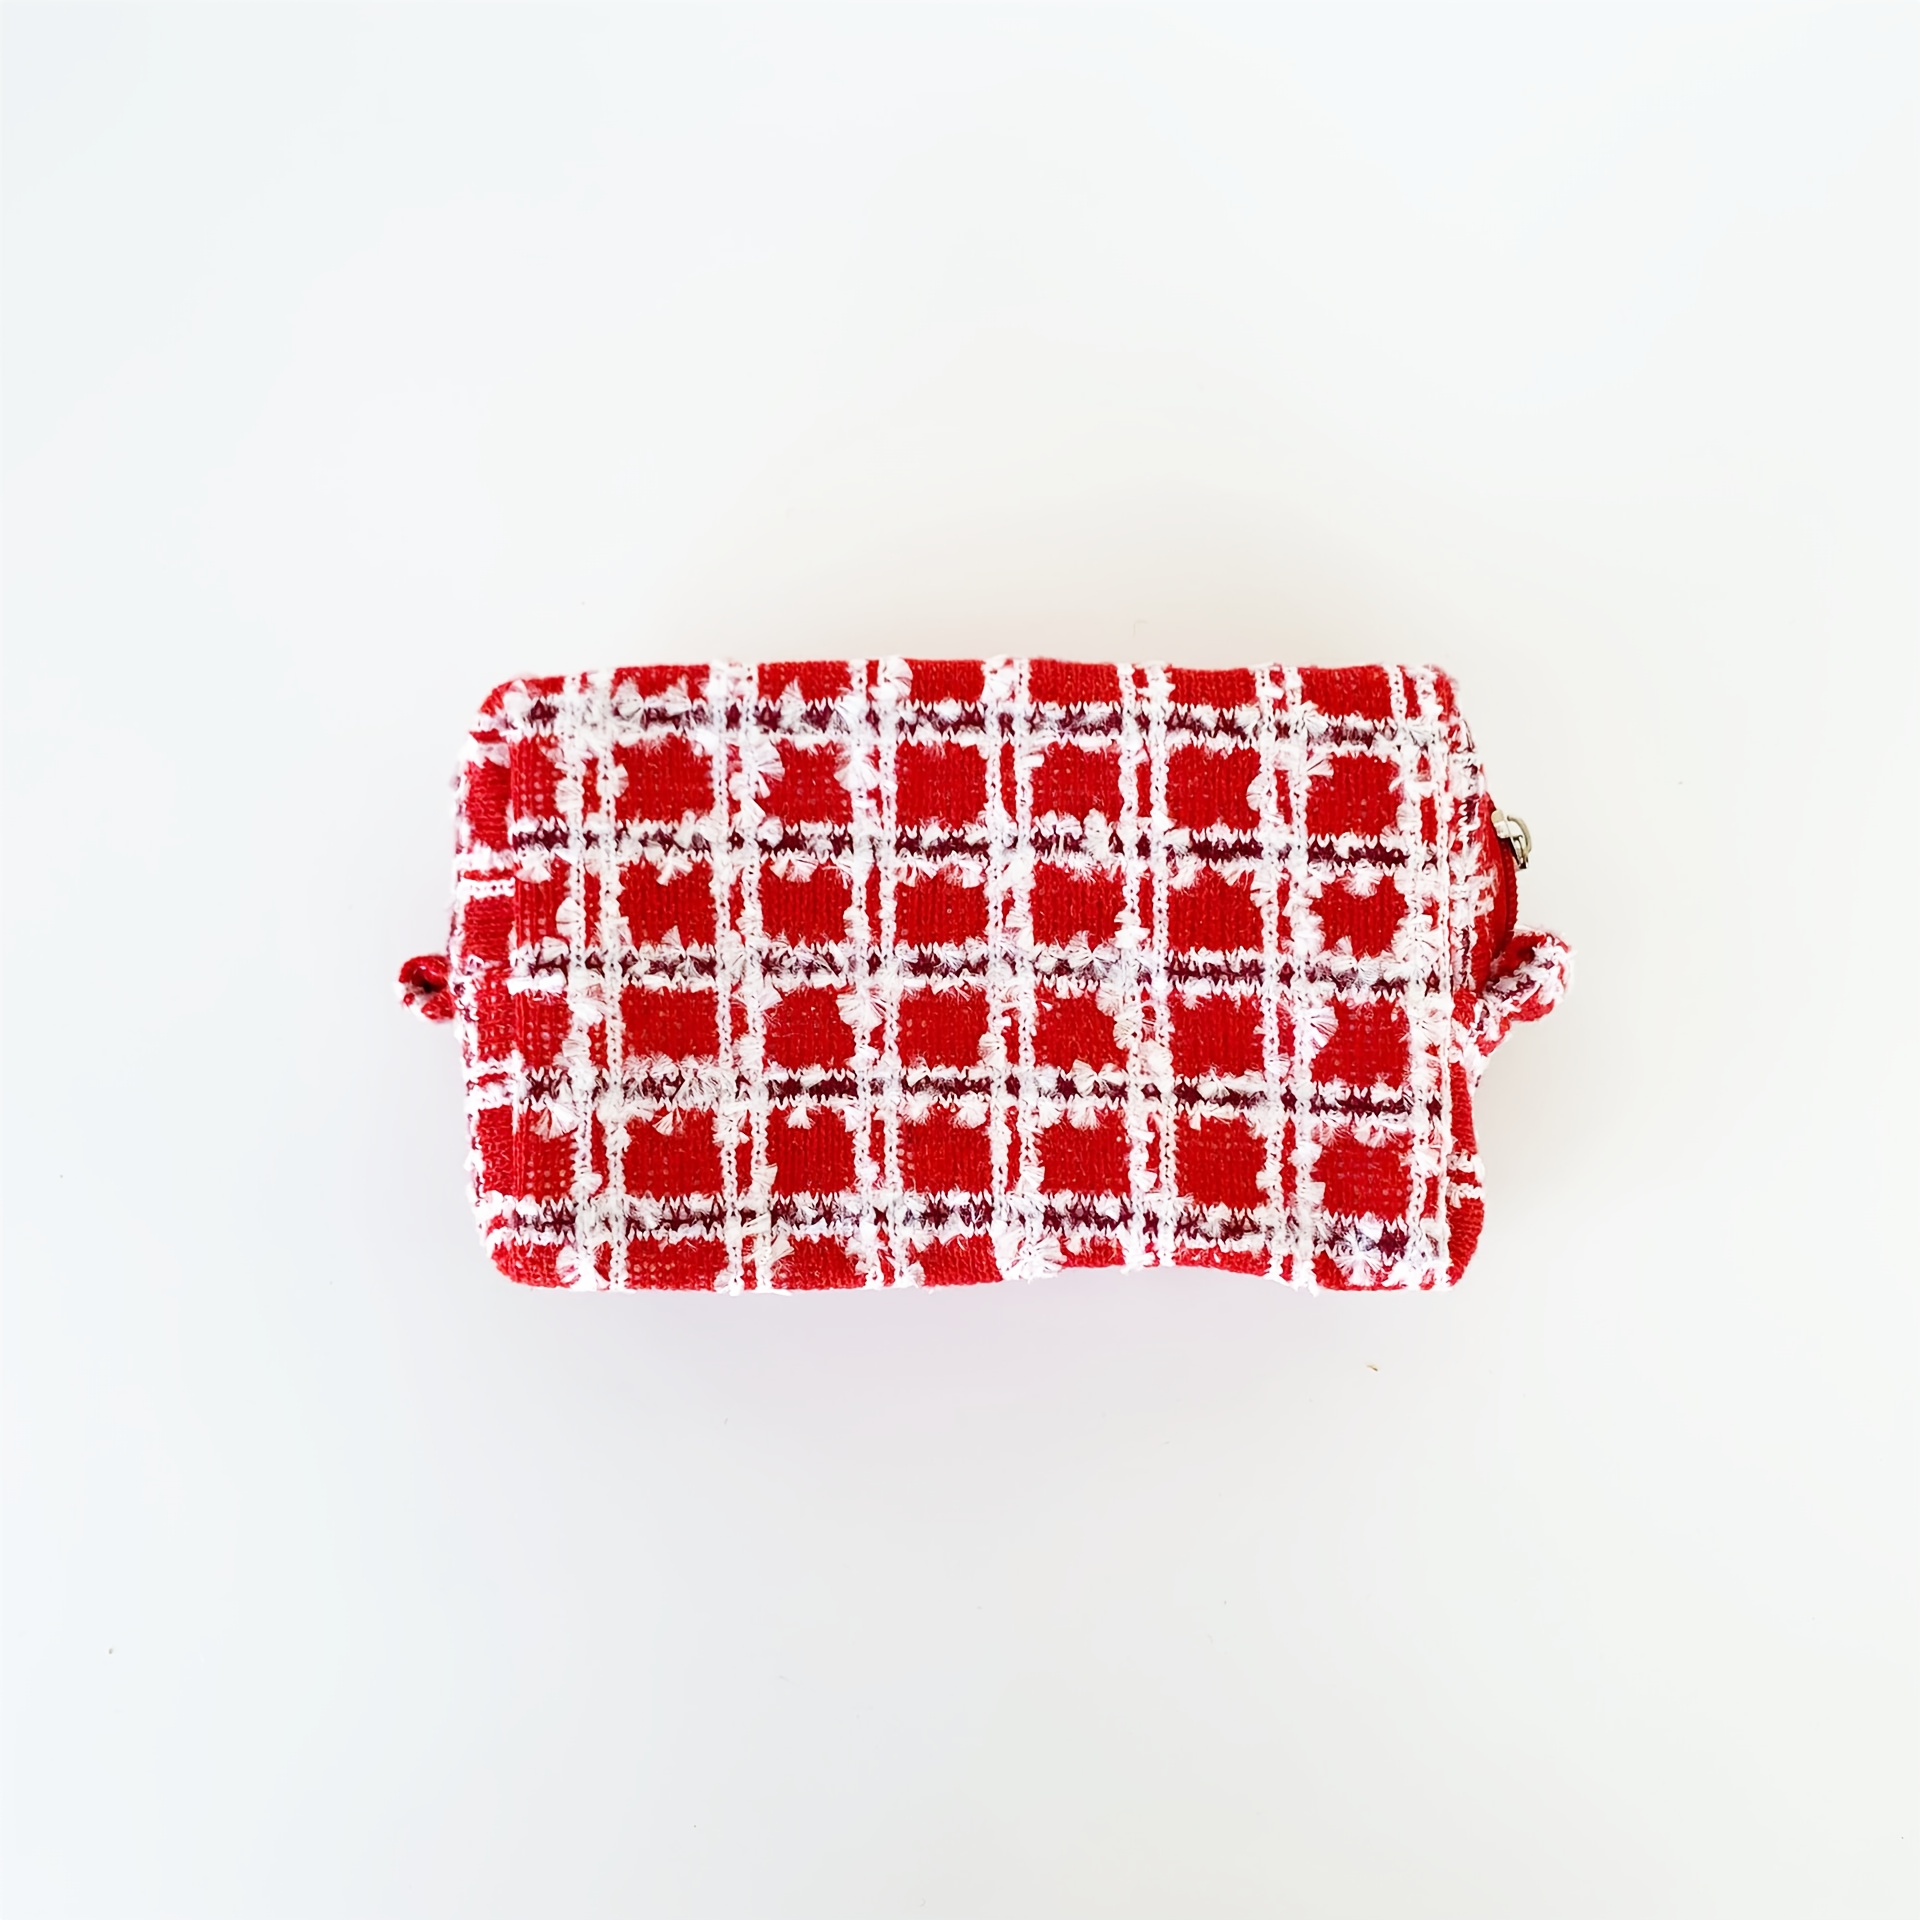 Knit Checkered Makeup Bag